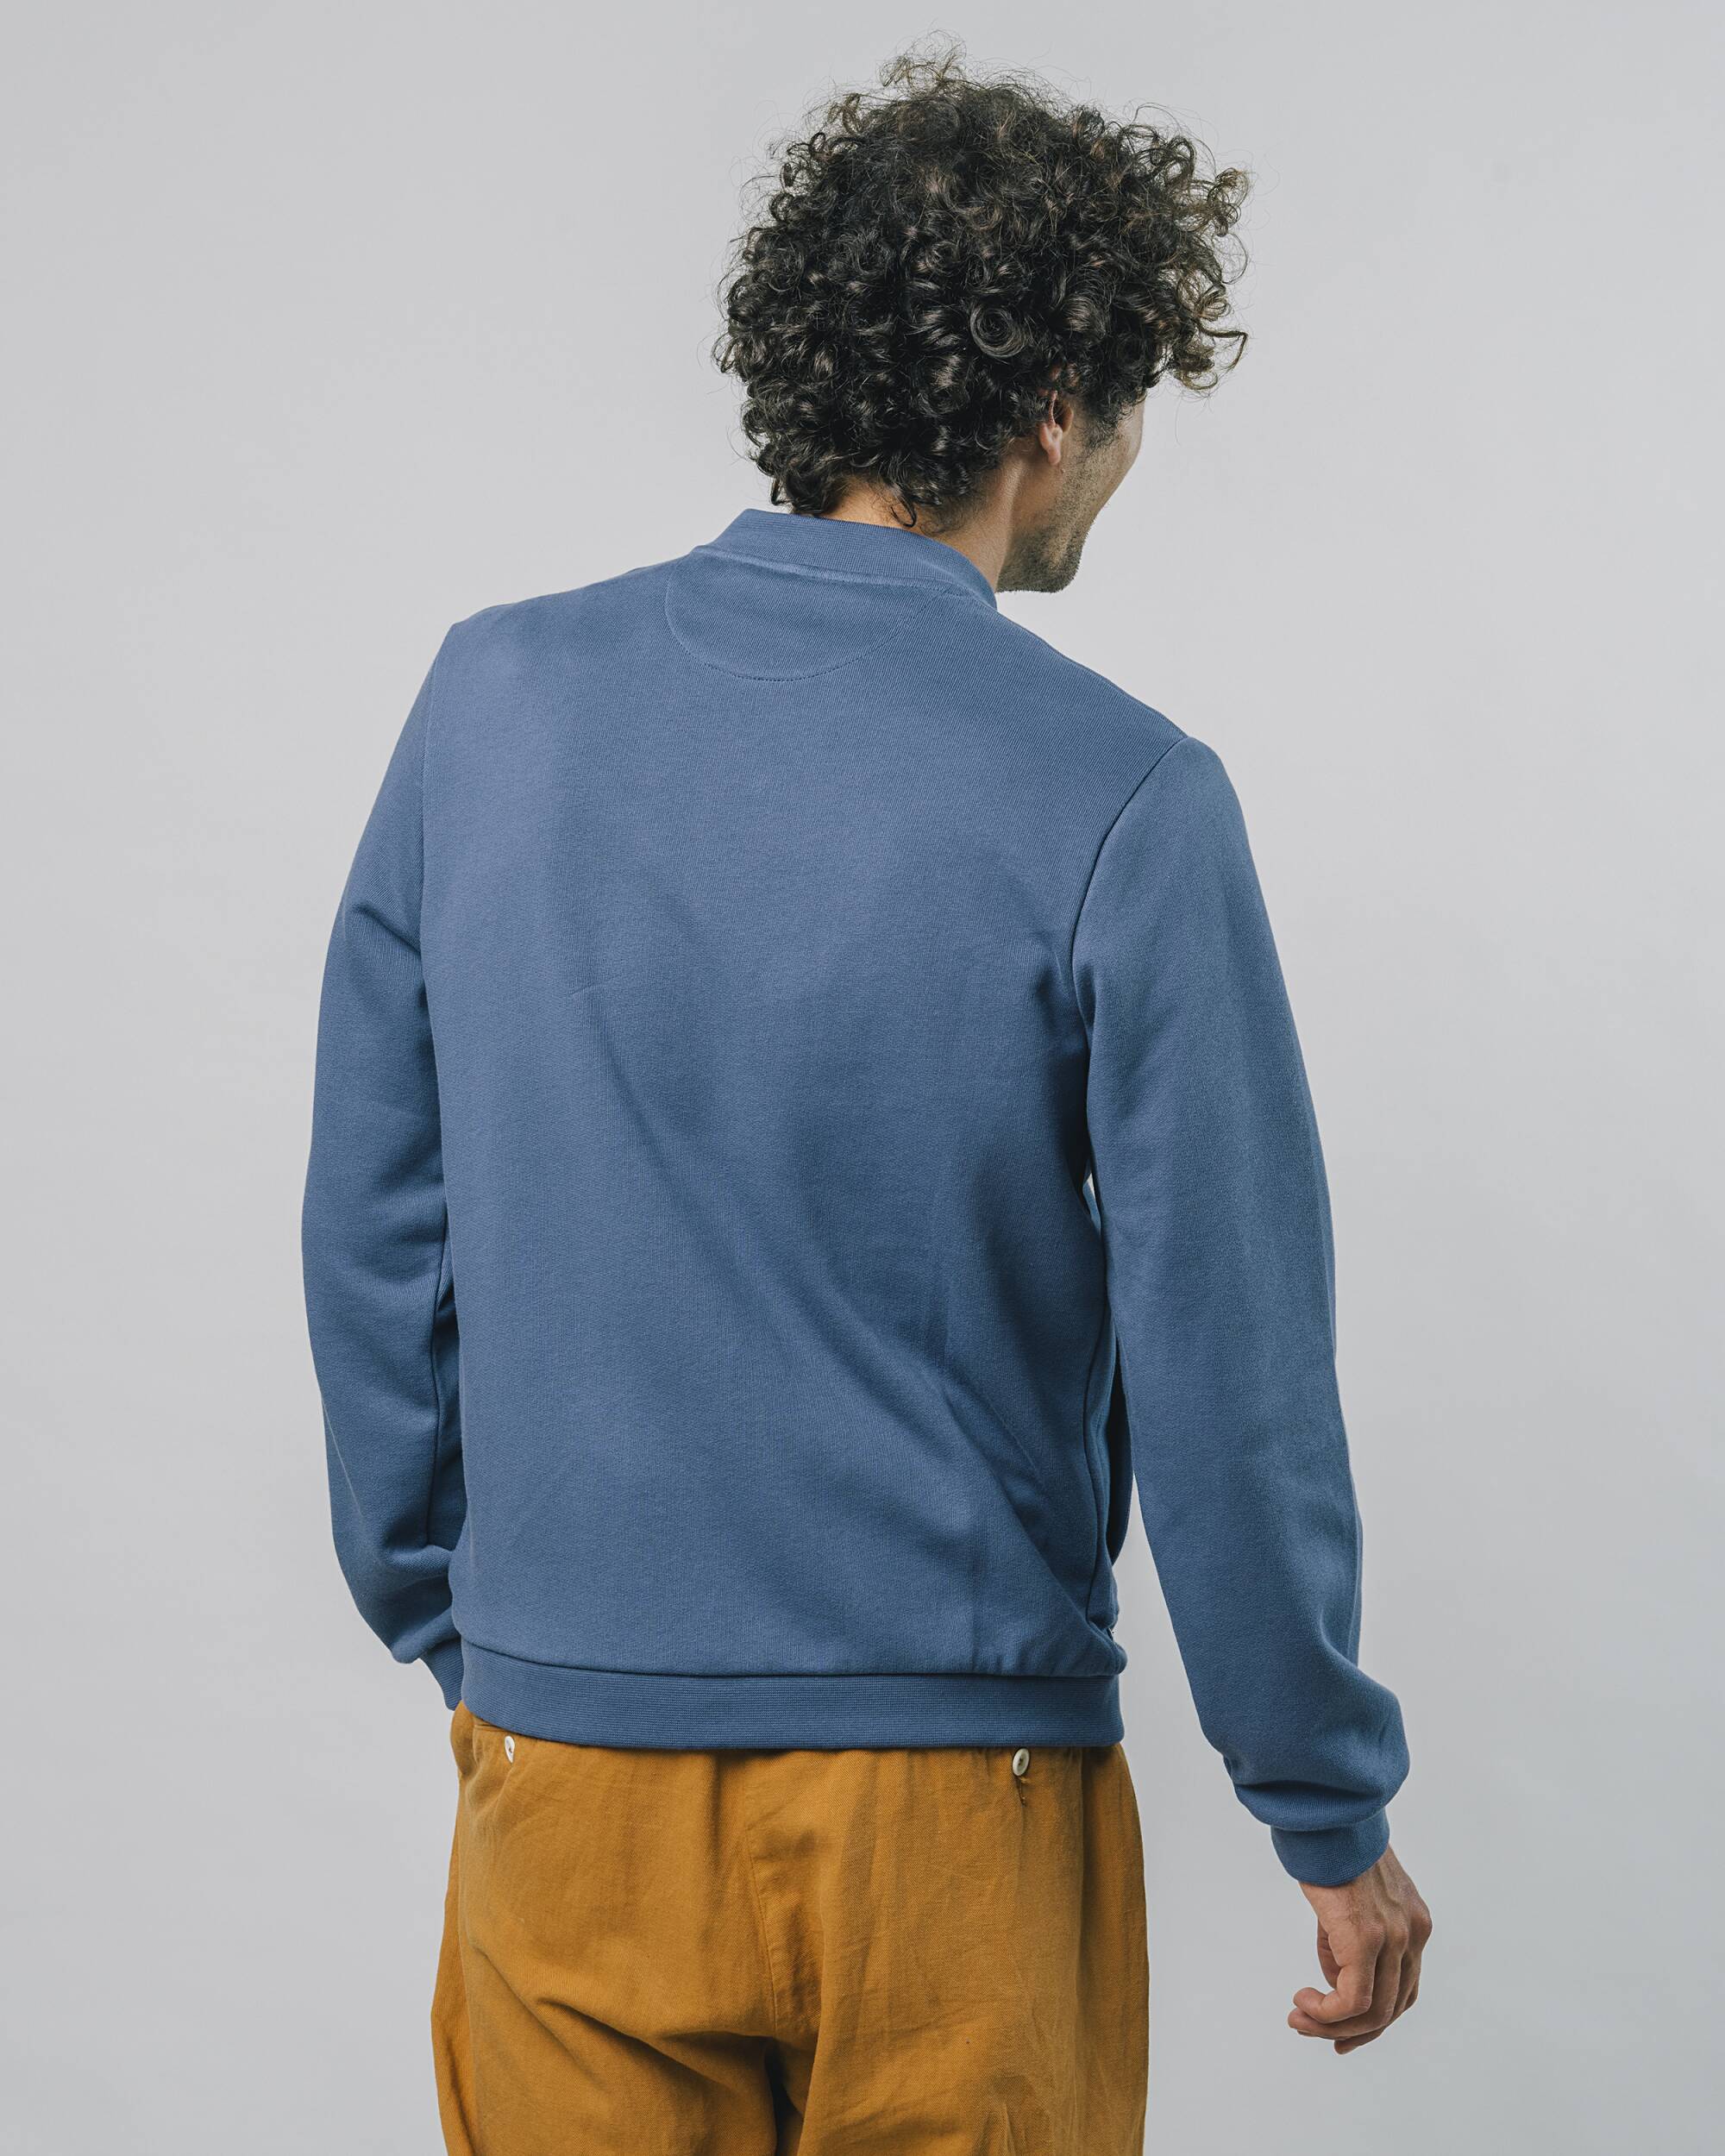 Blue Tokyo Baseball Club jacket made from 100% organic cotton by Brava Fabrics